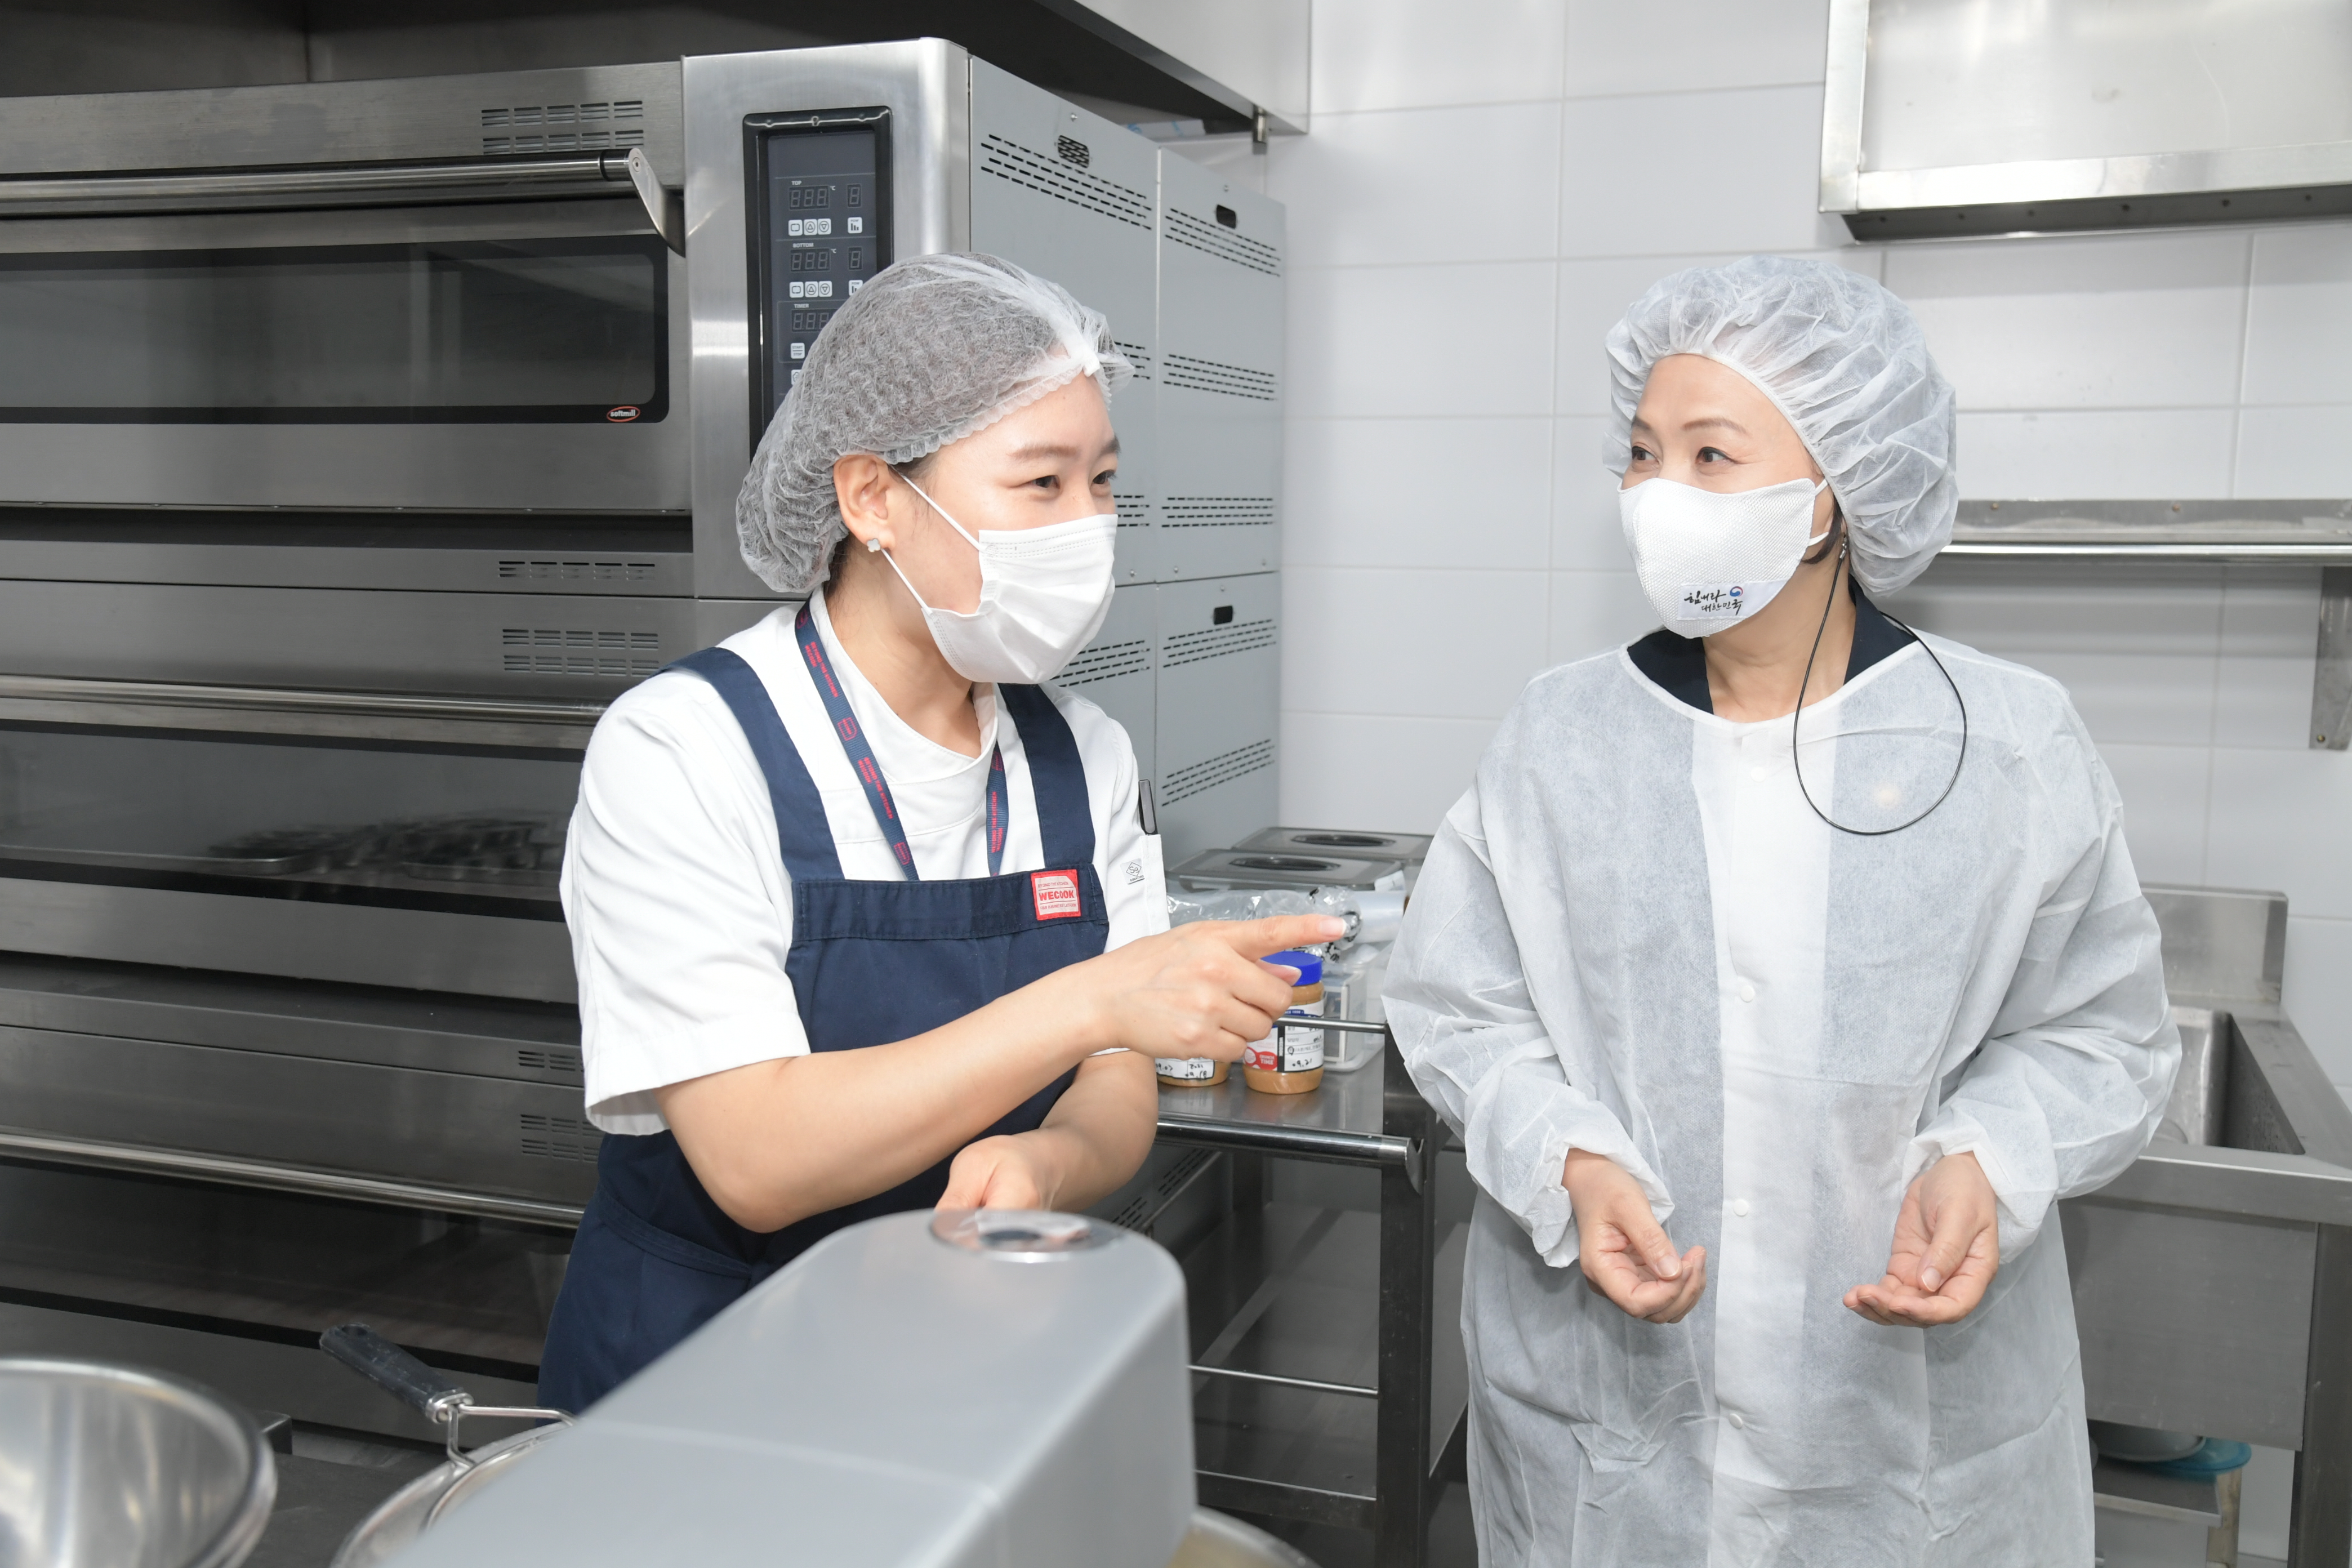 Photo News3 - [Sep. 24, 2020] Minister visits shared kitchen startup